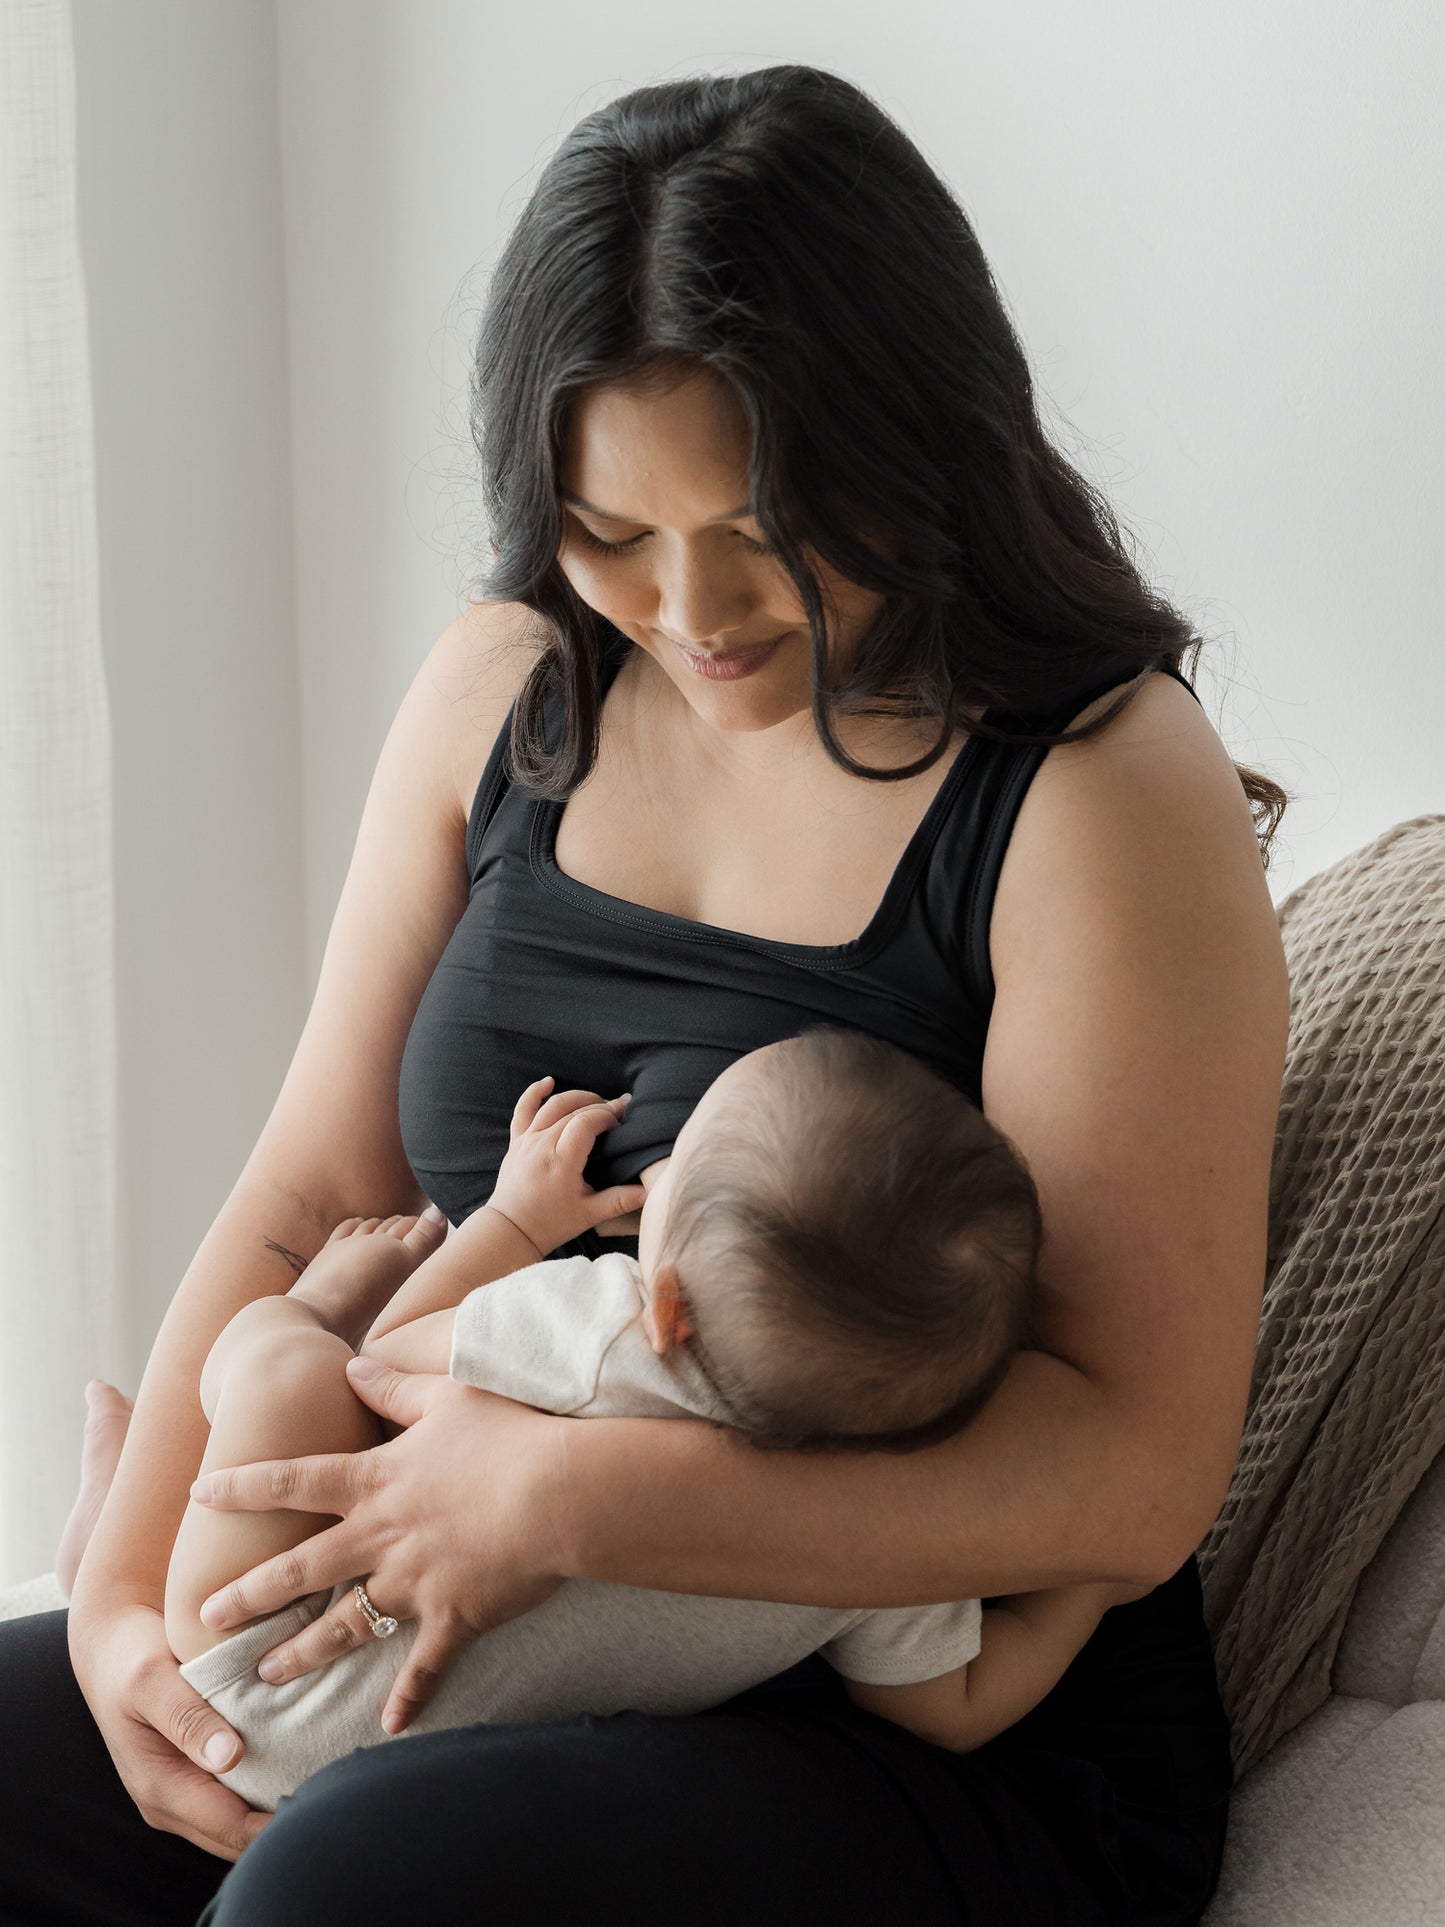 Model breastfeeding her baby while wearing the Everyday Essential Nursing Tank in Black.